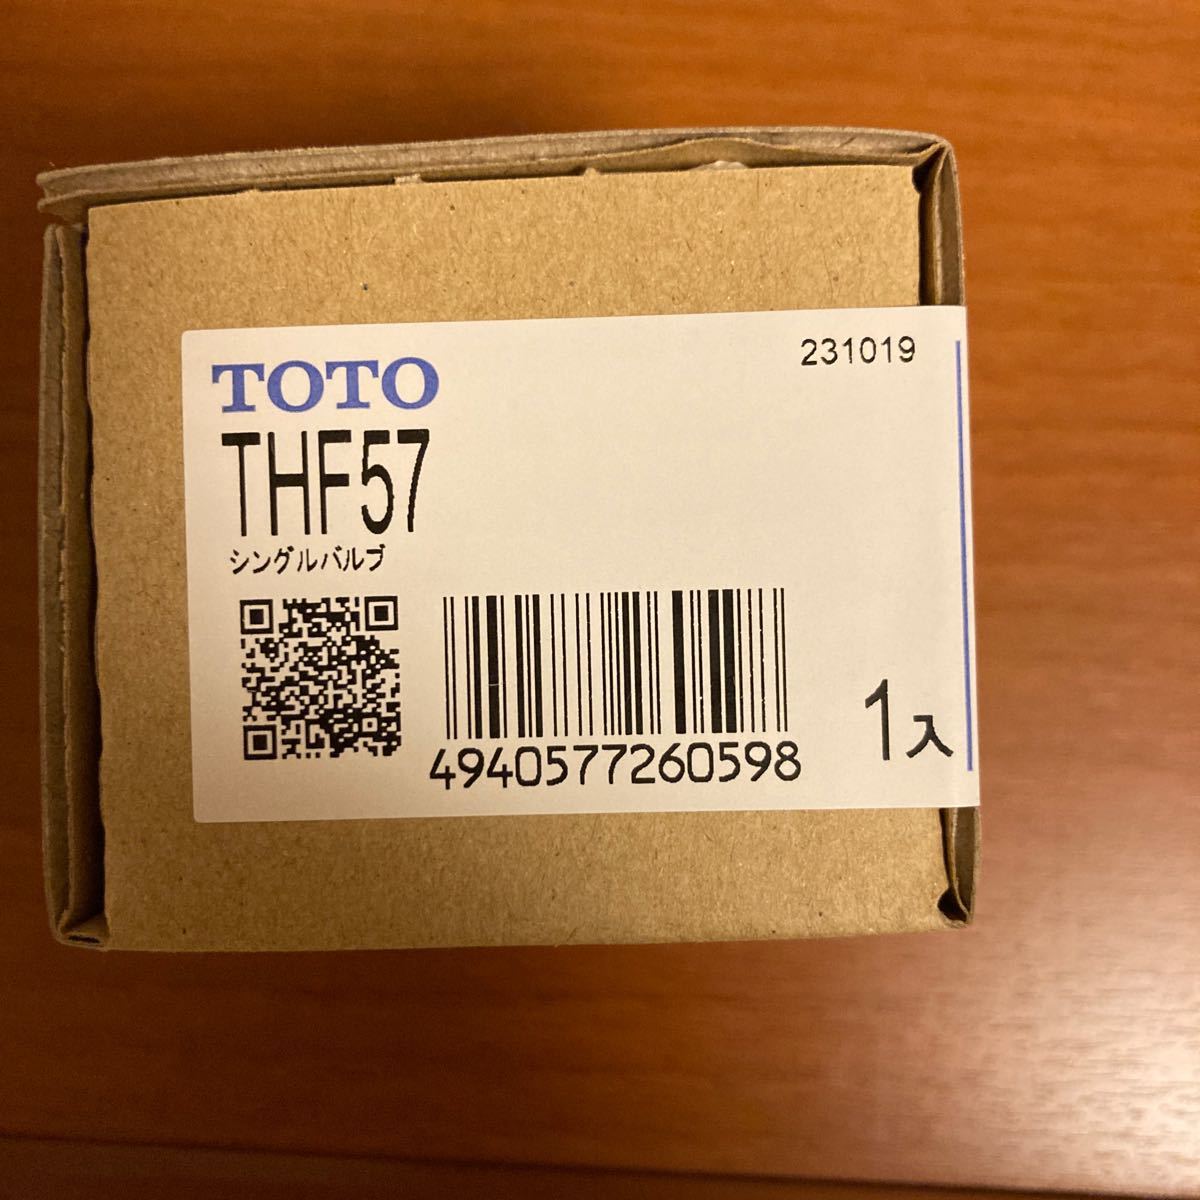 TOTO THF57 シングルバルブ部 エコシングル用 キッチン 水栓 部品 補修品 消耗 交換パーツ キッチン水栓 ヘッドパーツの画像1